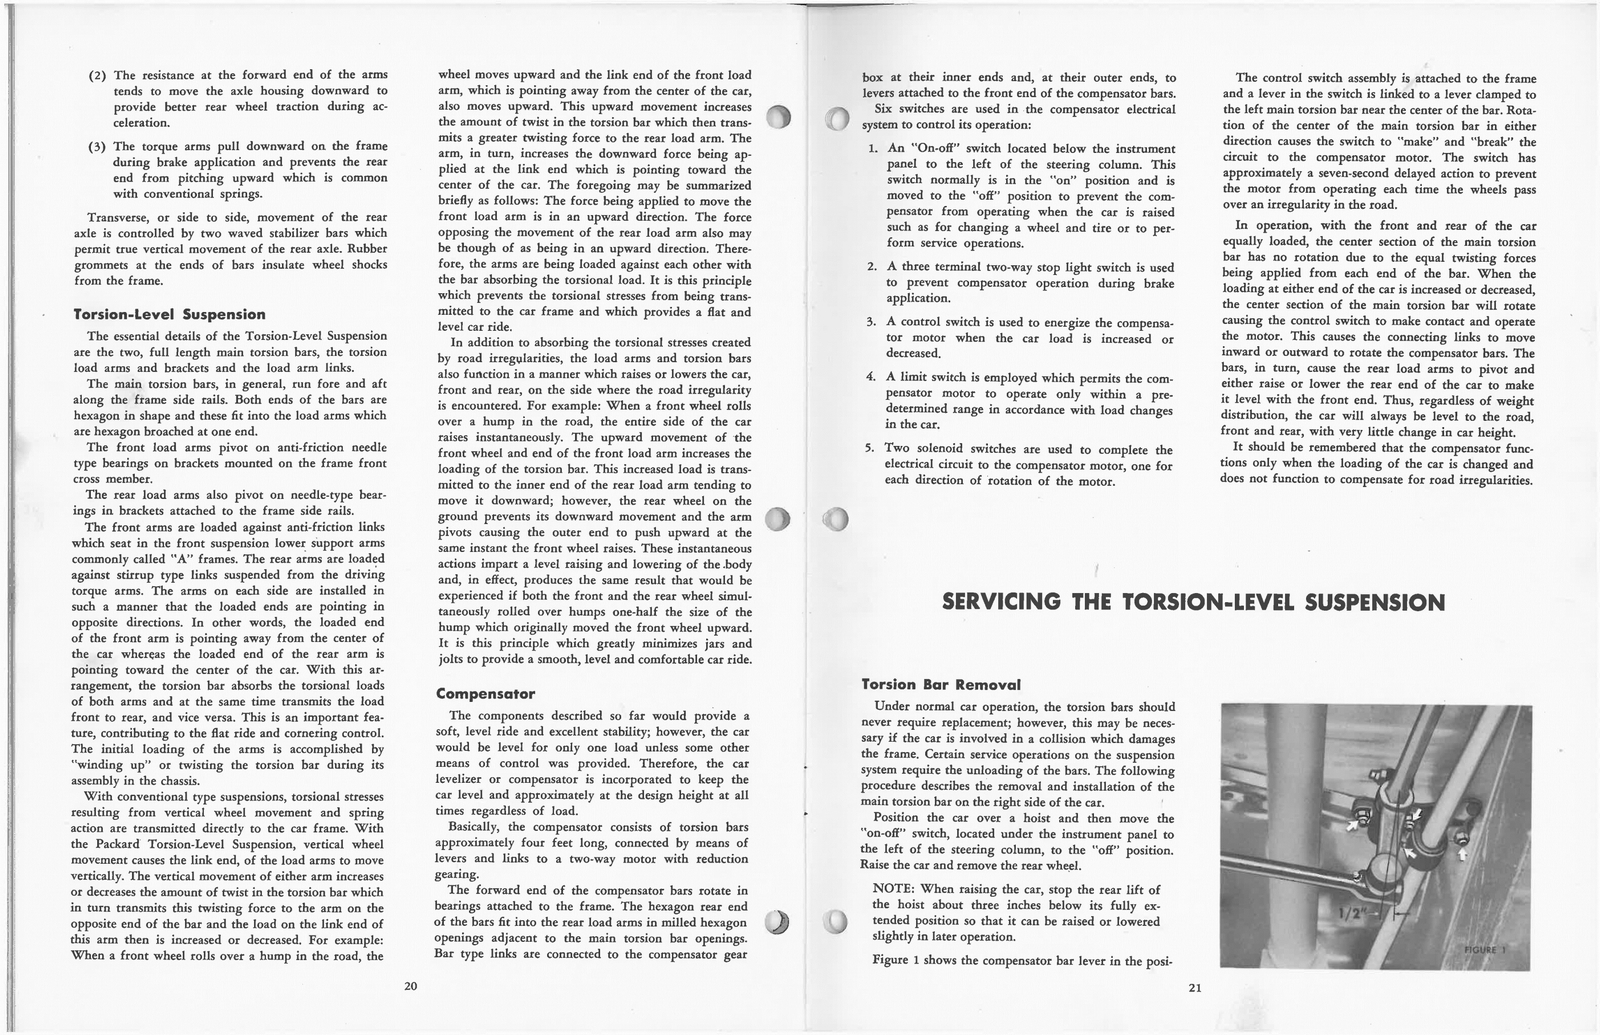 n_1955 Packard Sevicemens Training Book-20-21.jpg